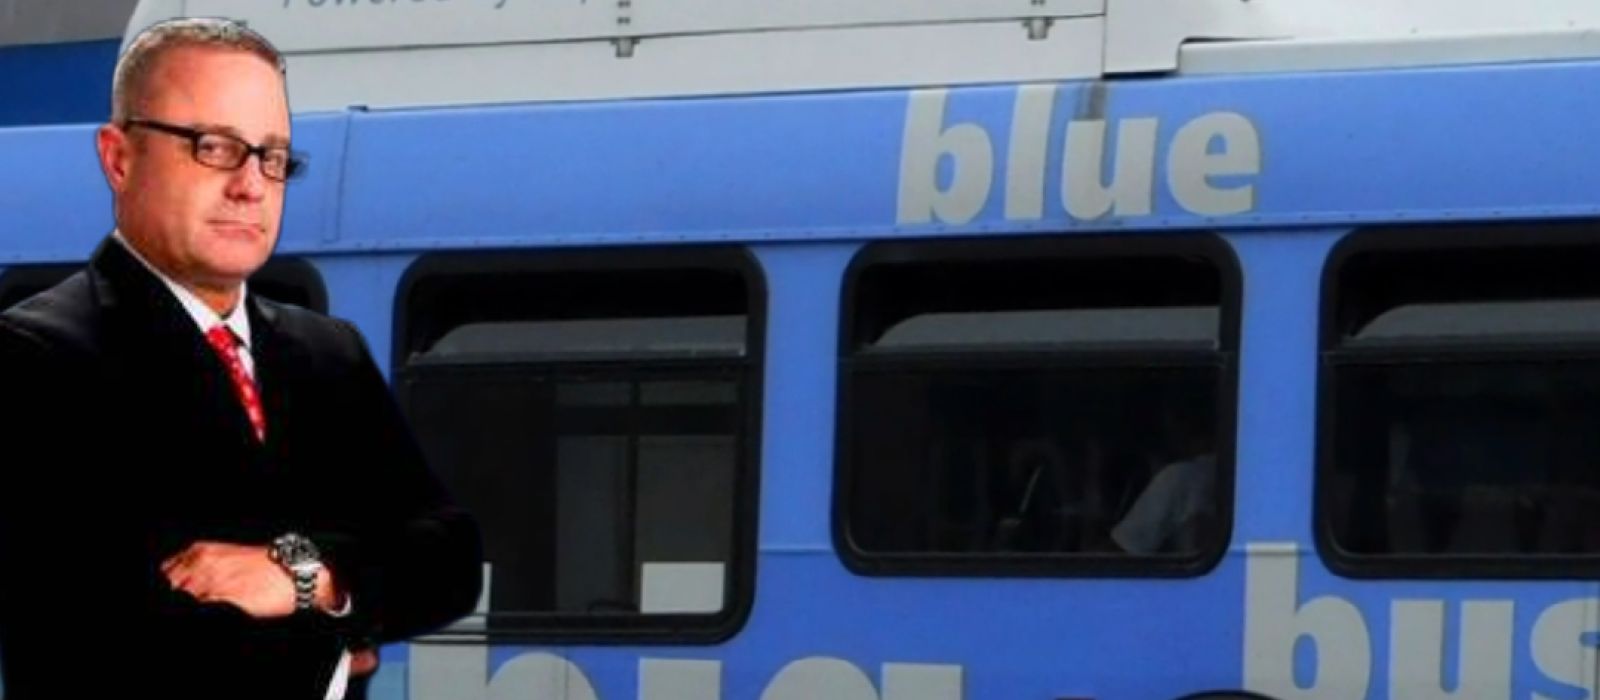 Big Blue Bus Accident Lawyer in Santa Monica, CA